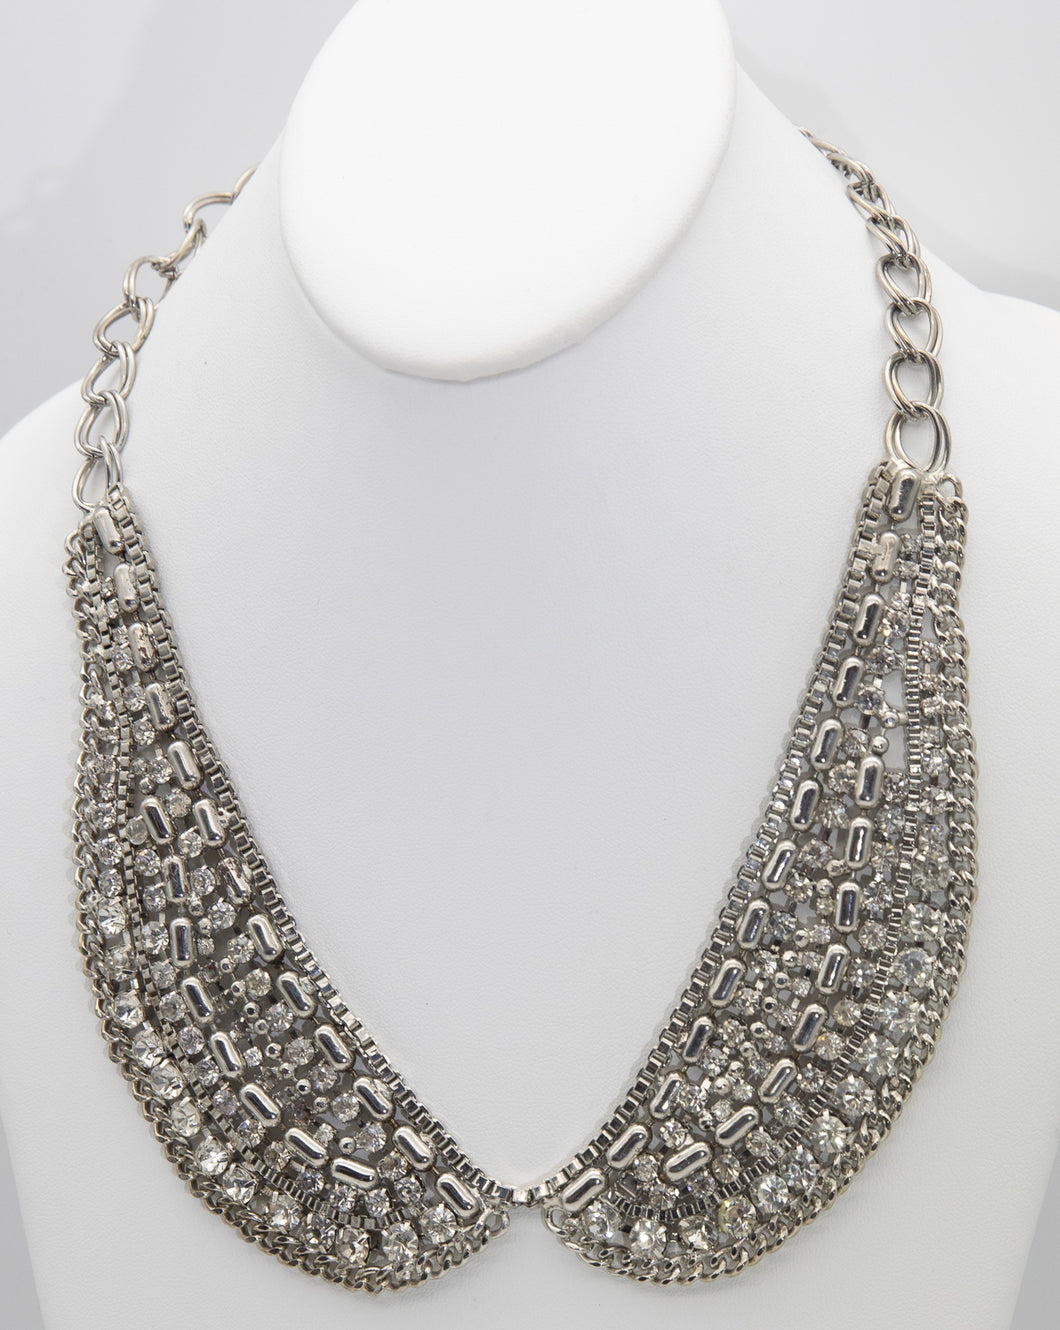 Vintage Rhinestone Collar Necklace  - JD10711